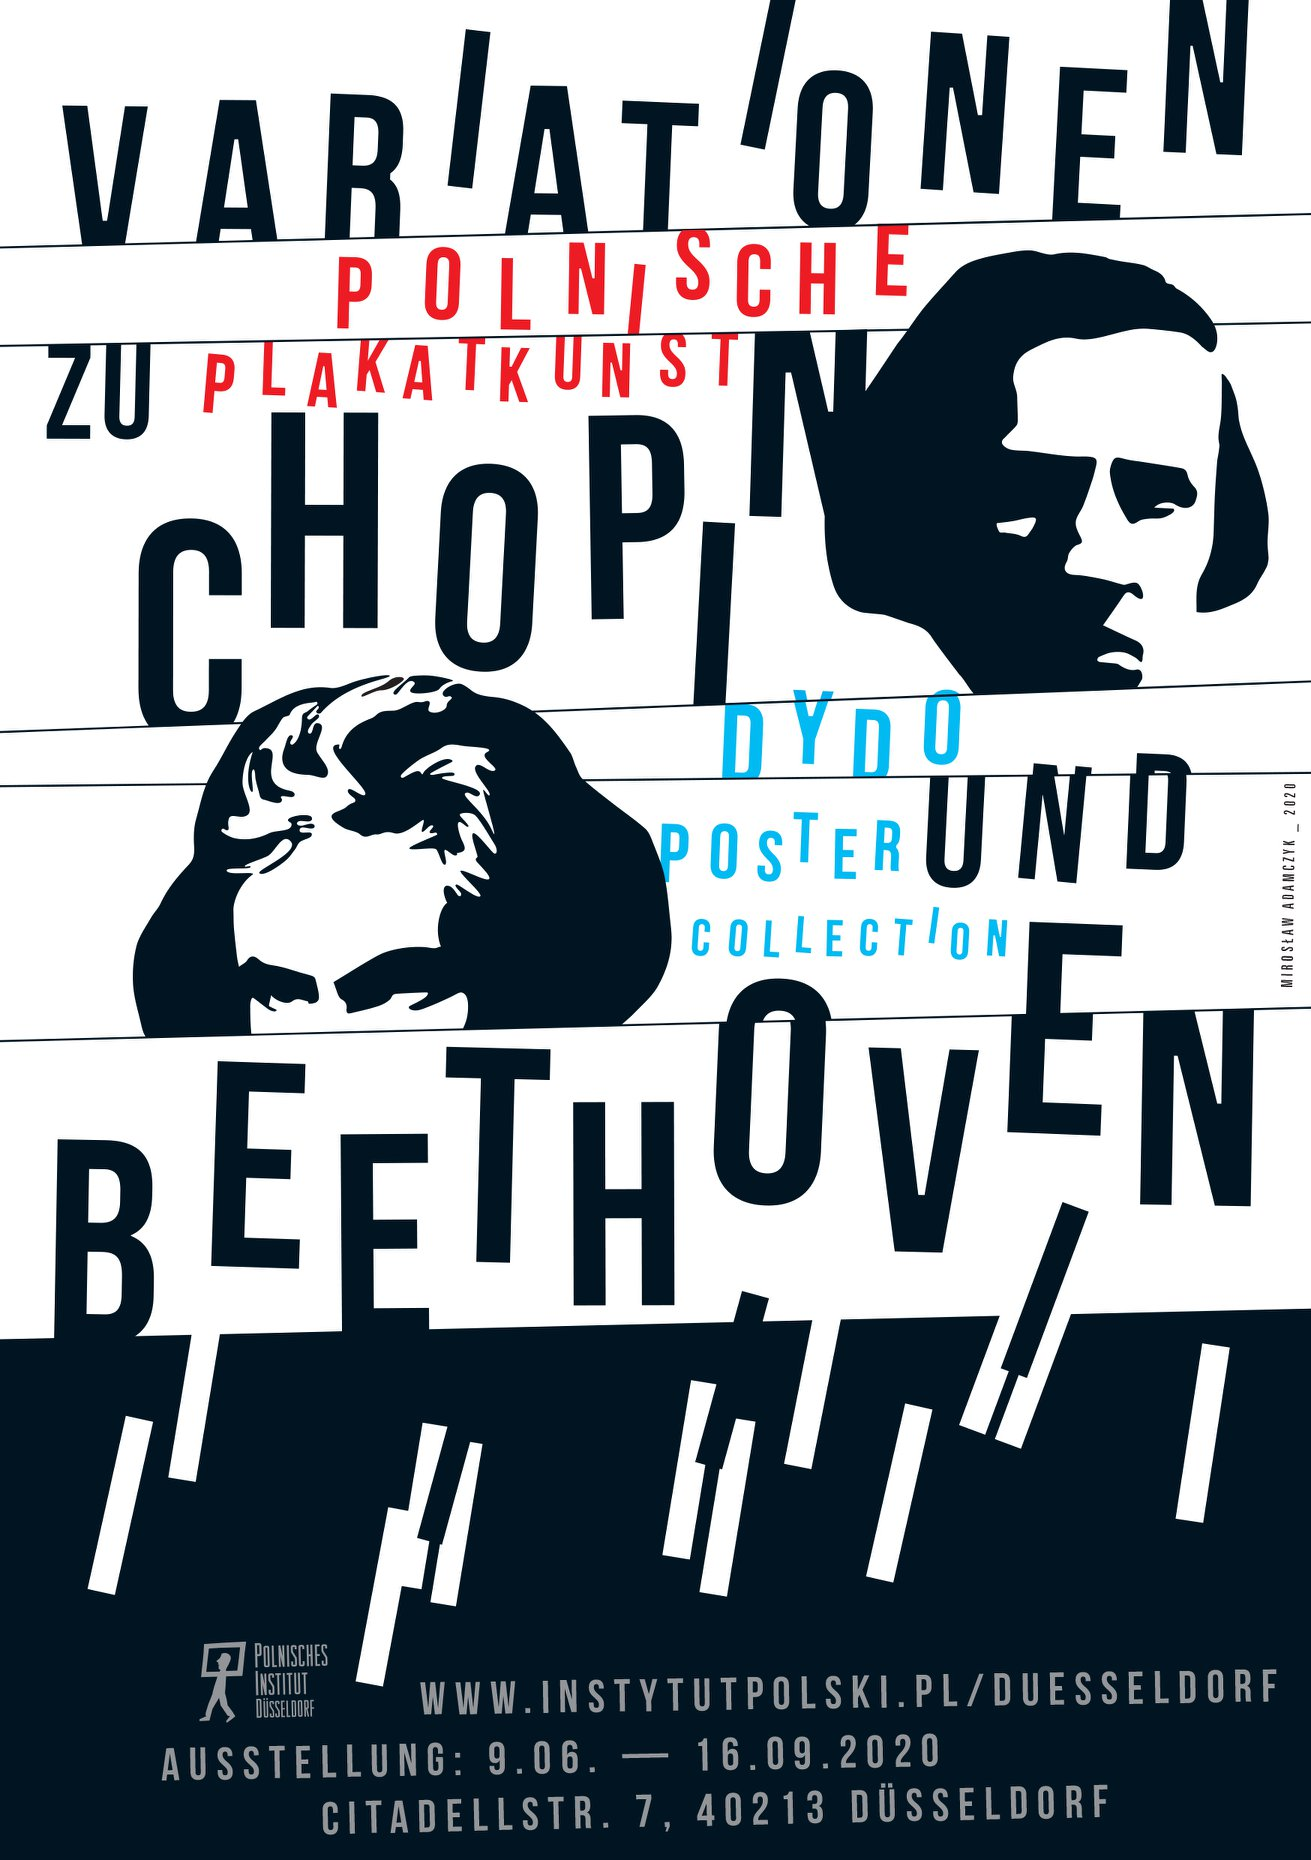 Chopin & Beethoven in Polish poster art / Dusseldorf